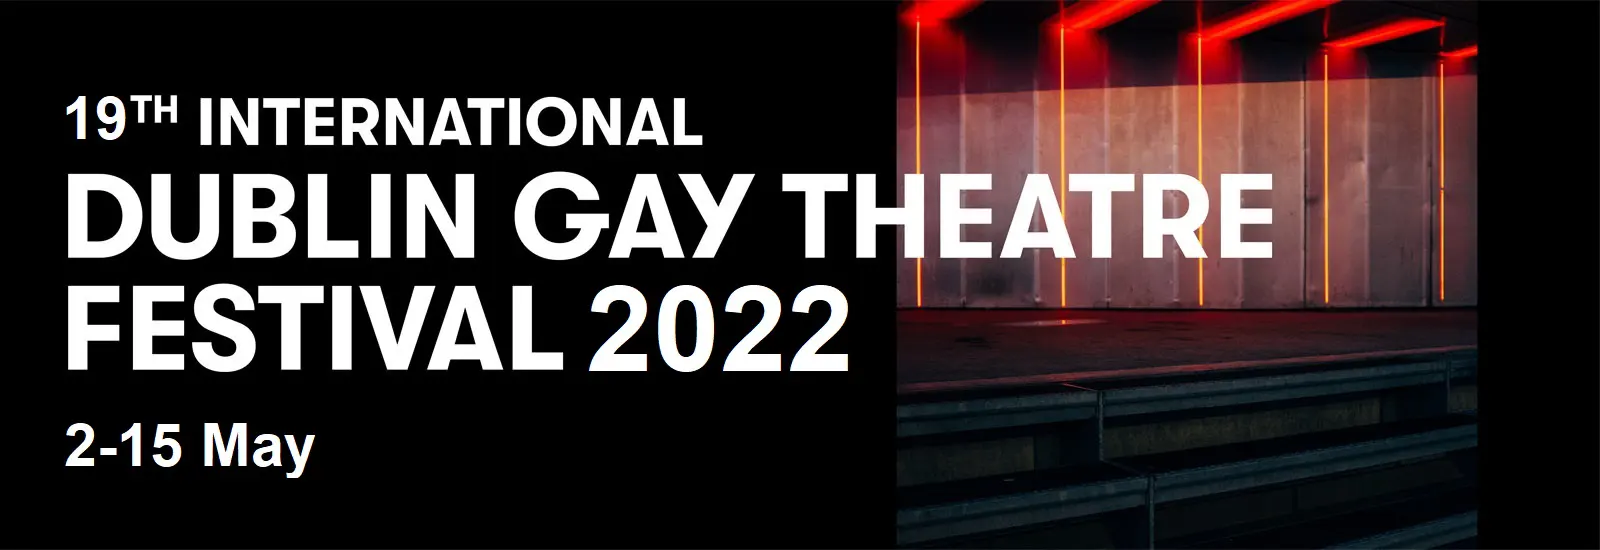 Dublin Gay Theatre Festival 2022